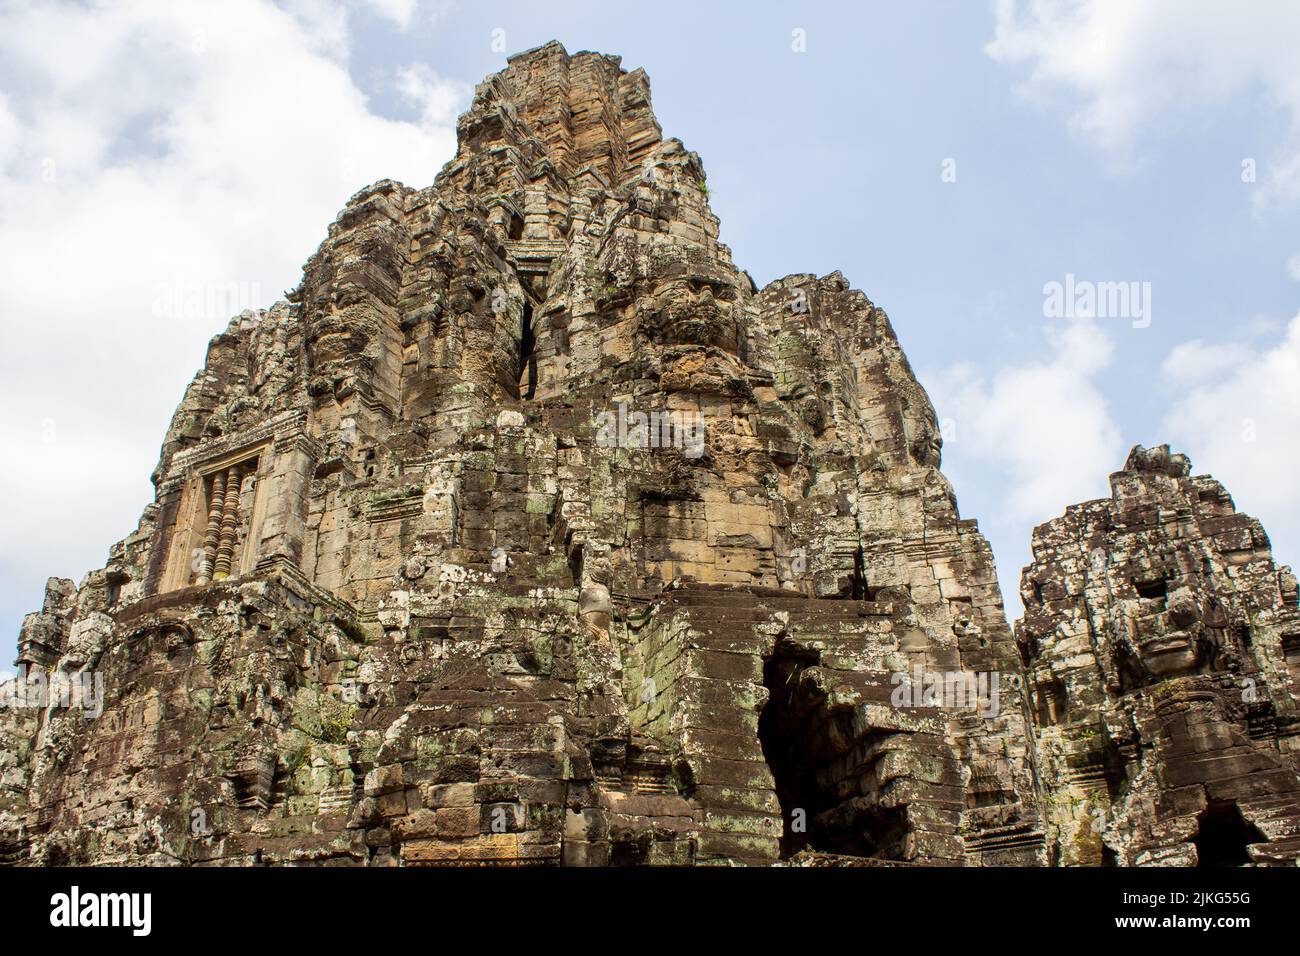 Ein historisches Denkmal im Tempel Angkor Wat, Siem Reap, Kambodscha Stockfoto